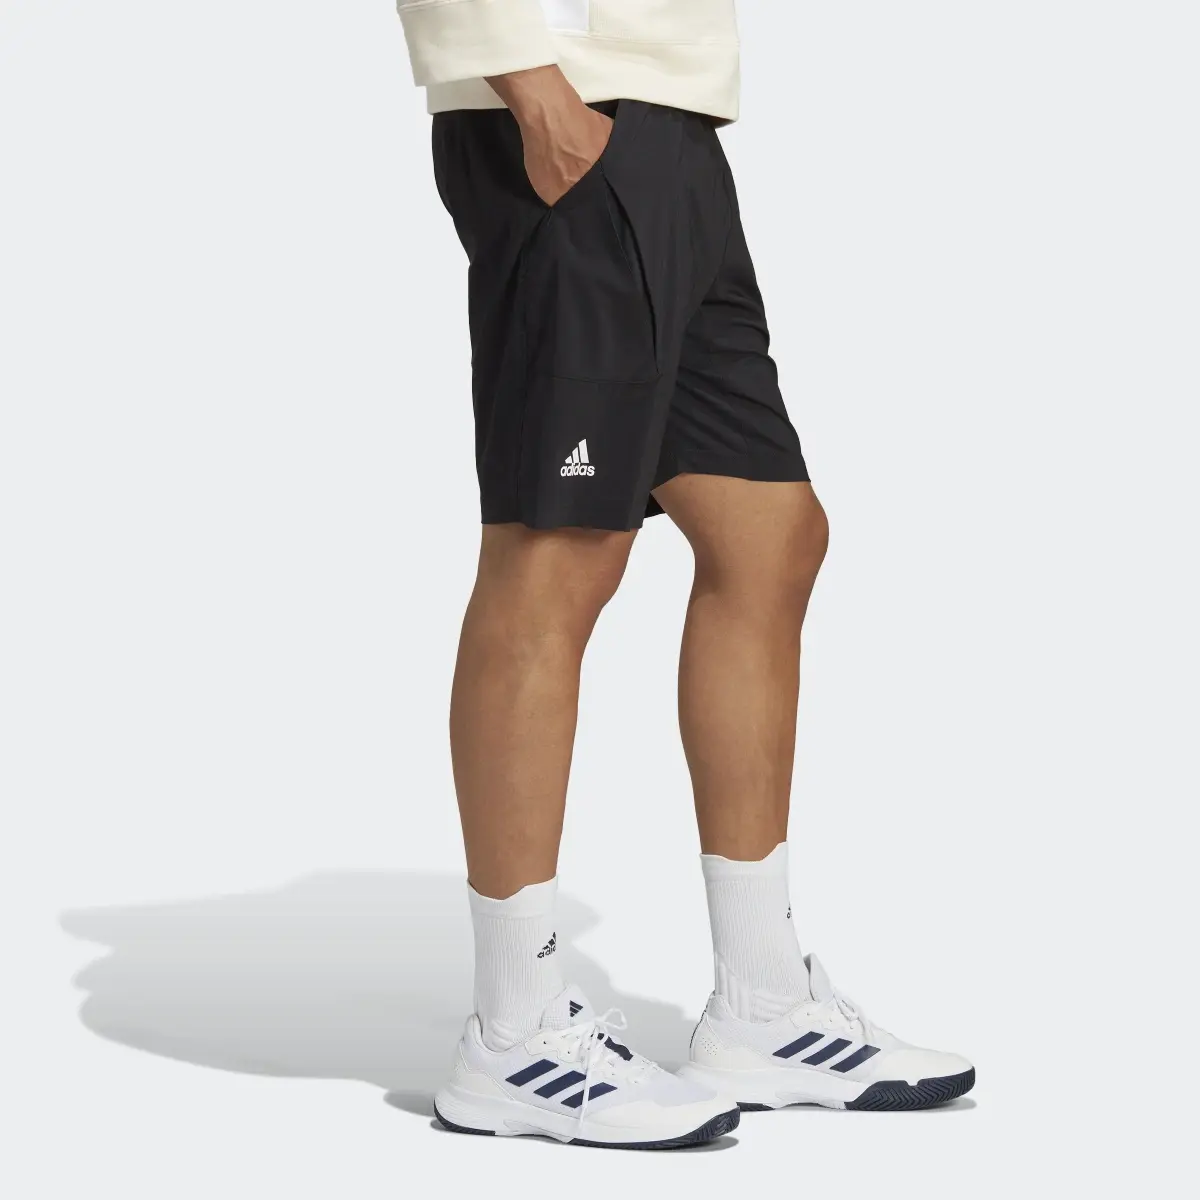 Adidas Tennis New York Ergo Shorts. 3